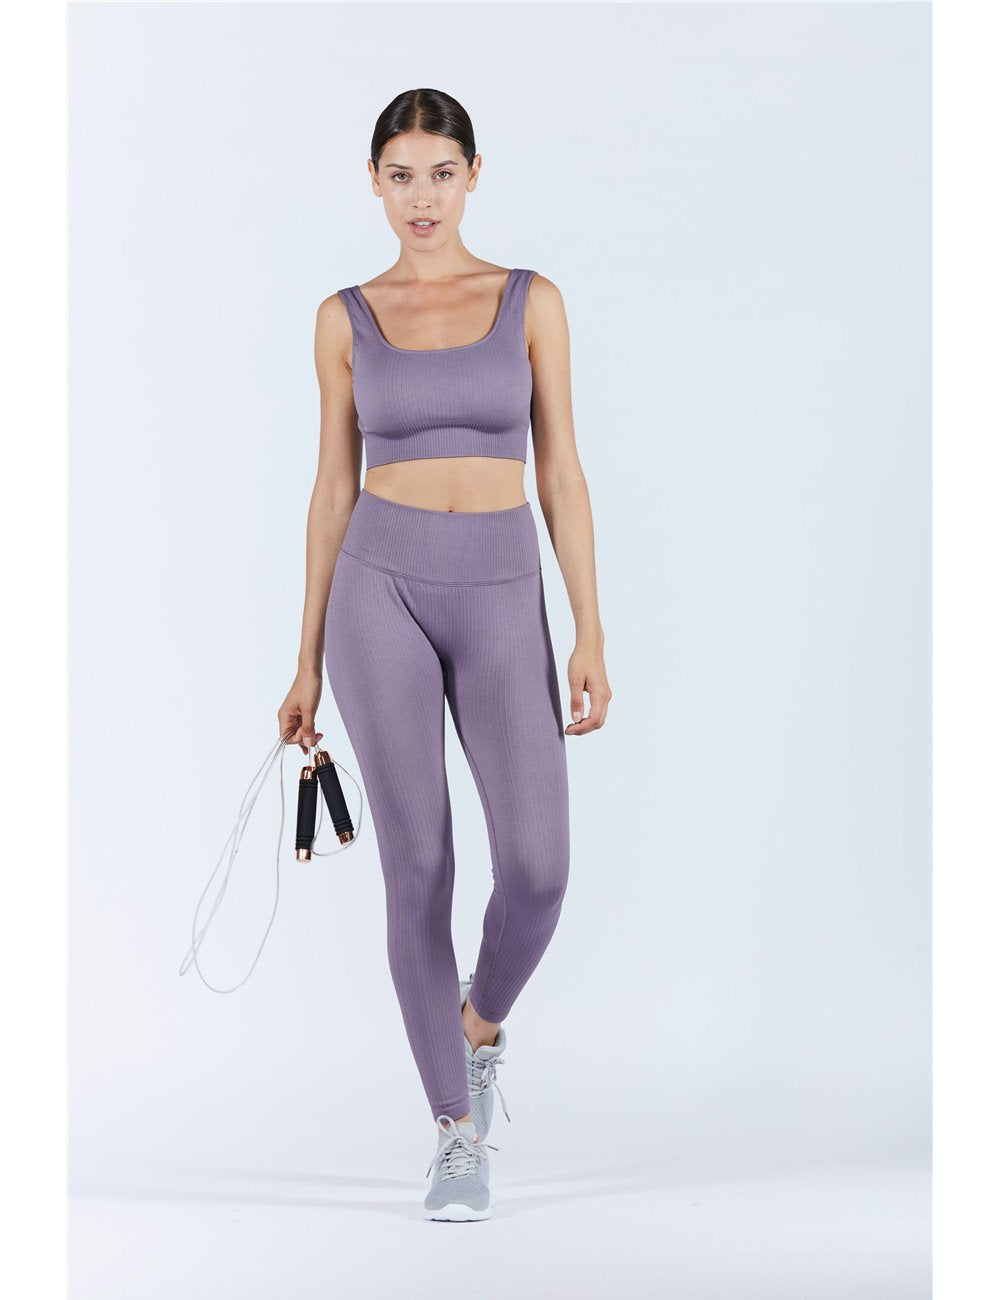 Legging Sport Femme Gainant violet